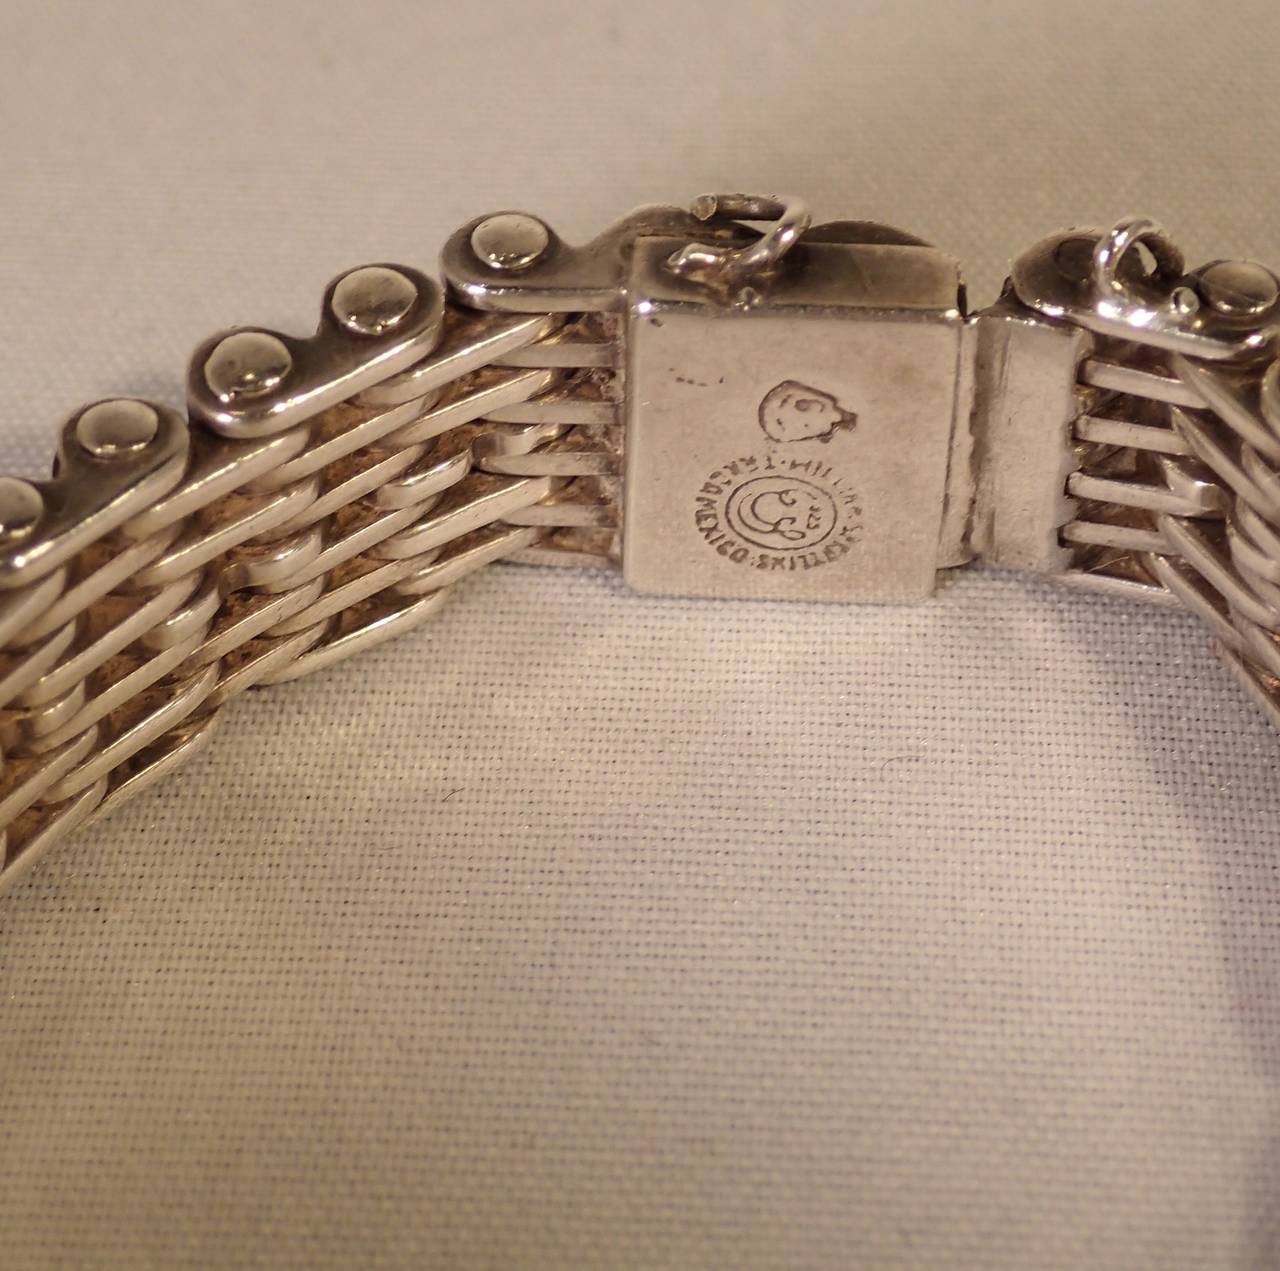 Metalwork 1960s William Spratling Silver Bicycle Chain Style Bracelet